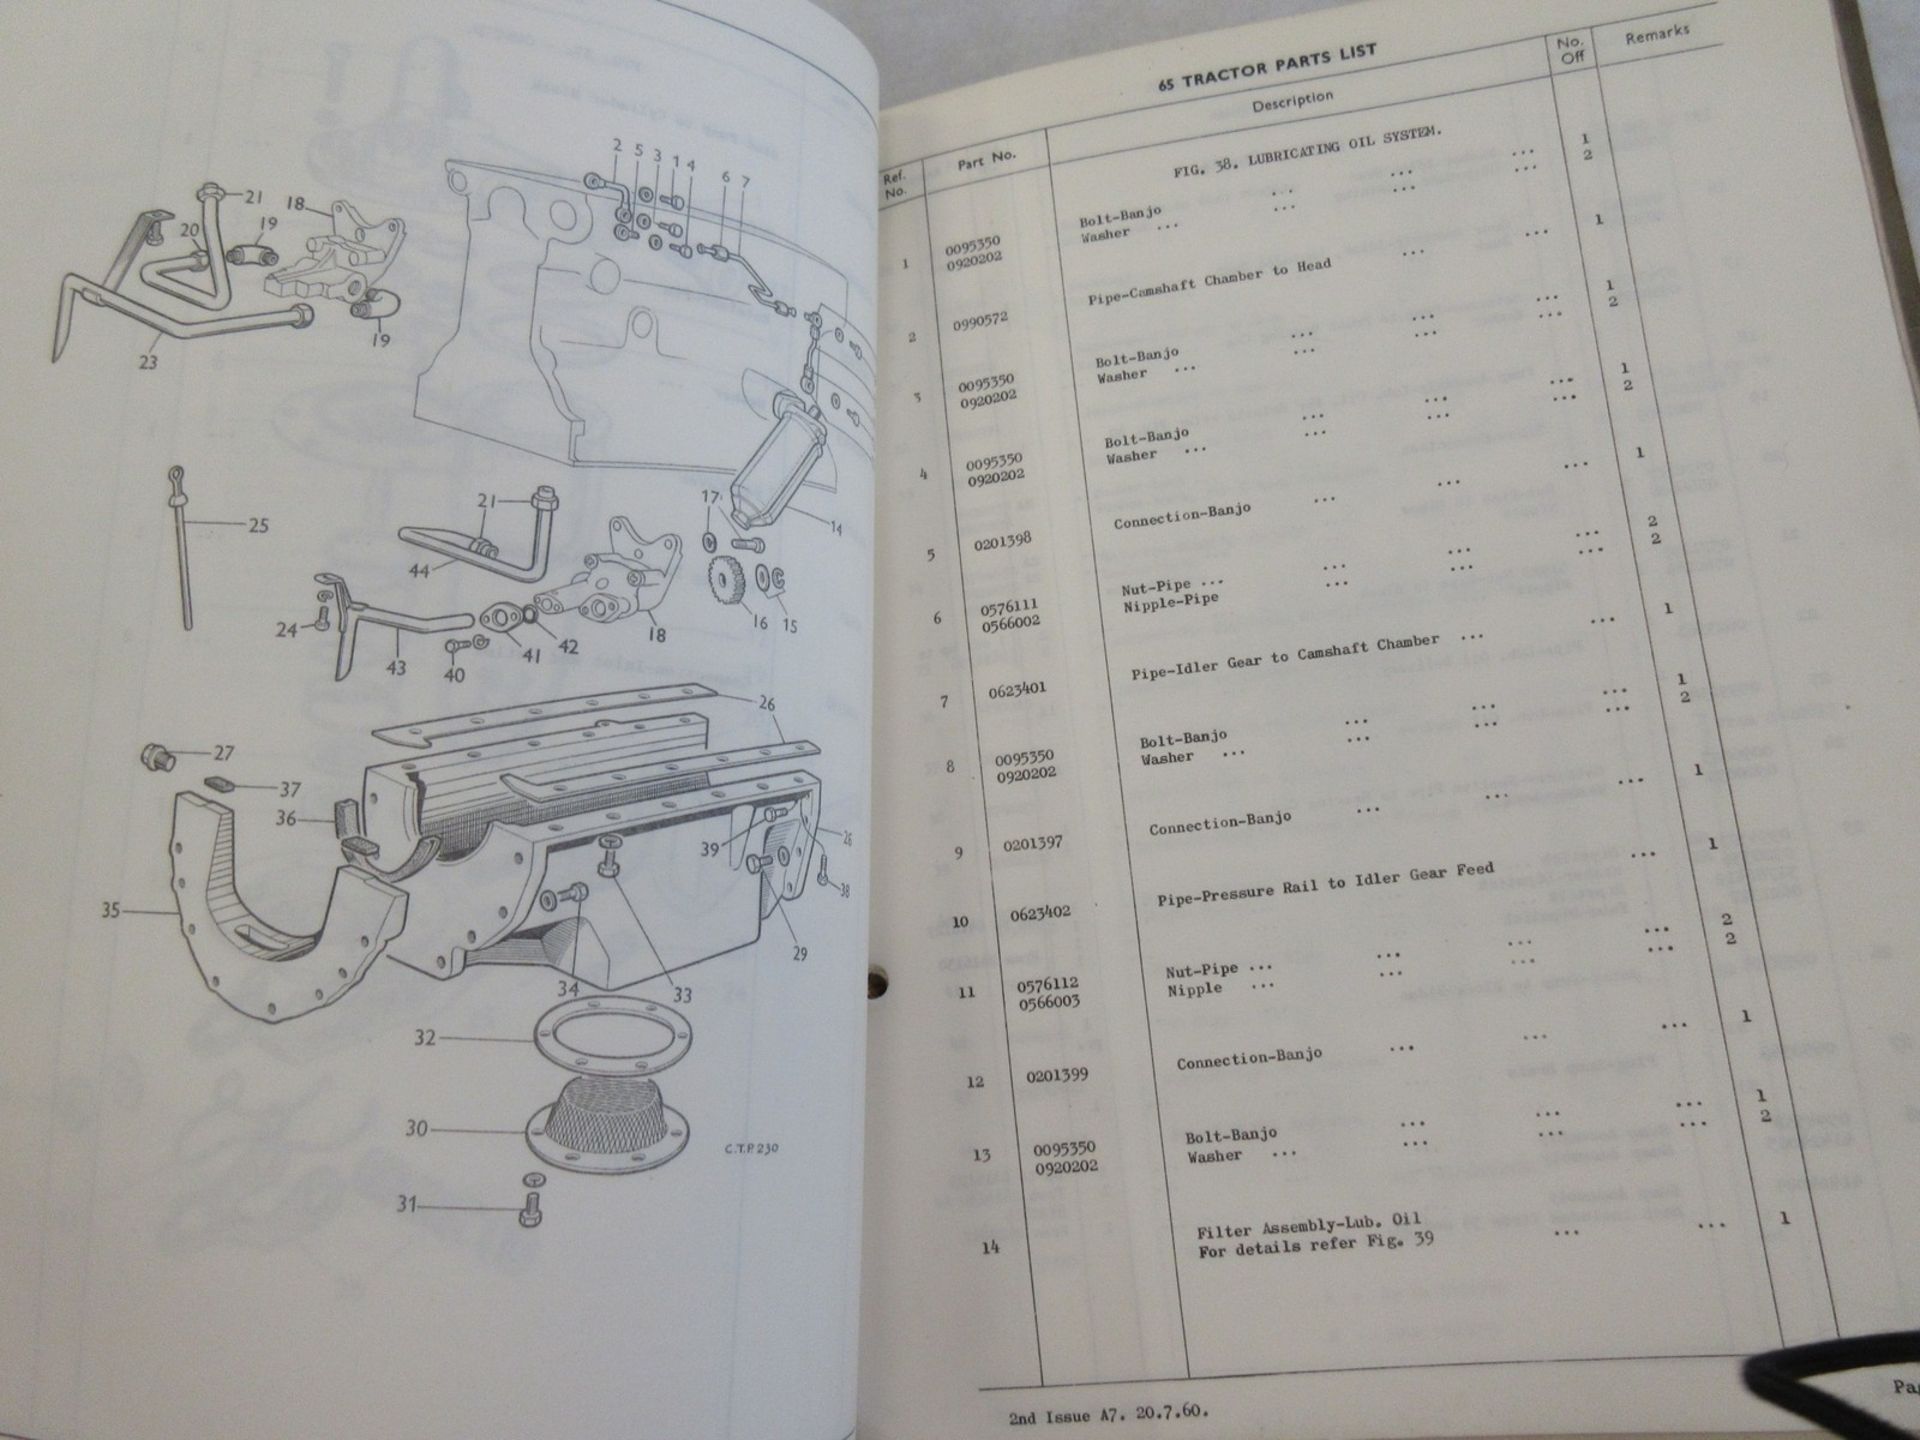 Massey Ferguson MF65 manual - Image 2 of 2